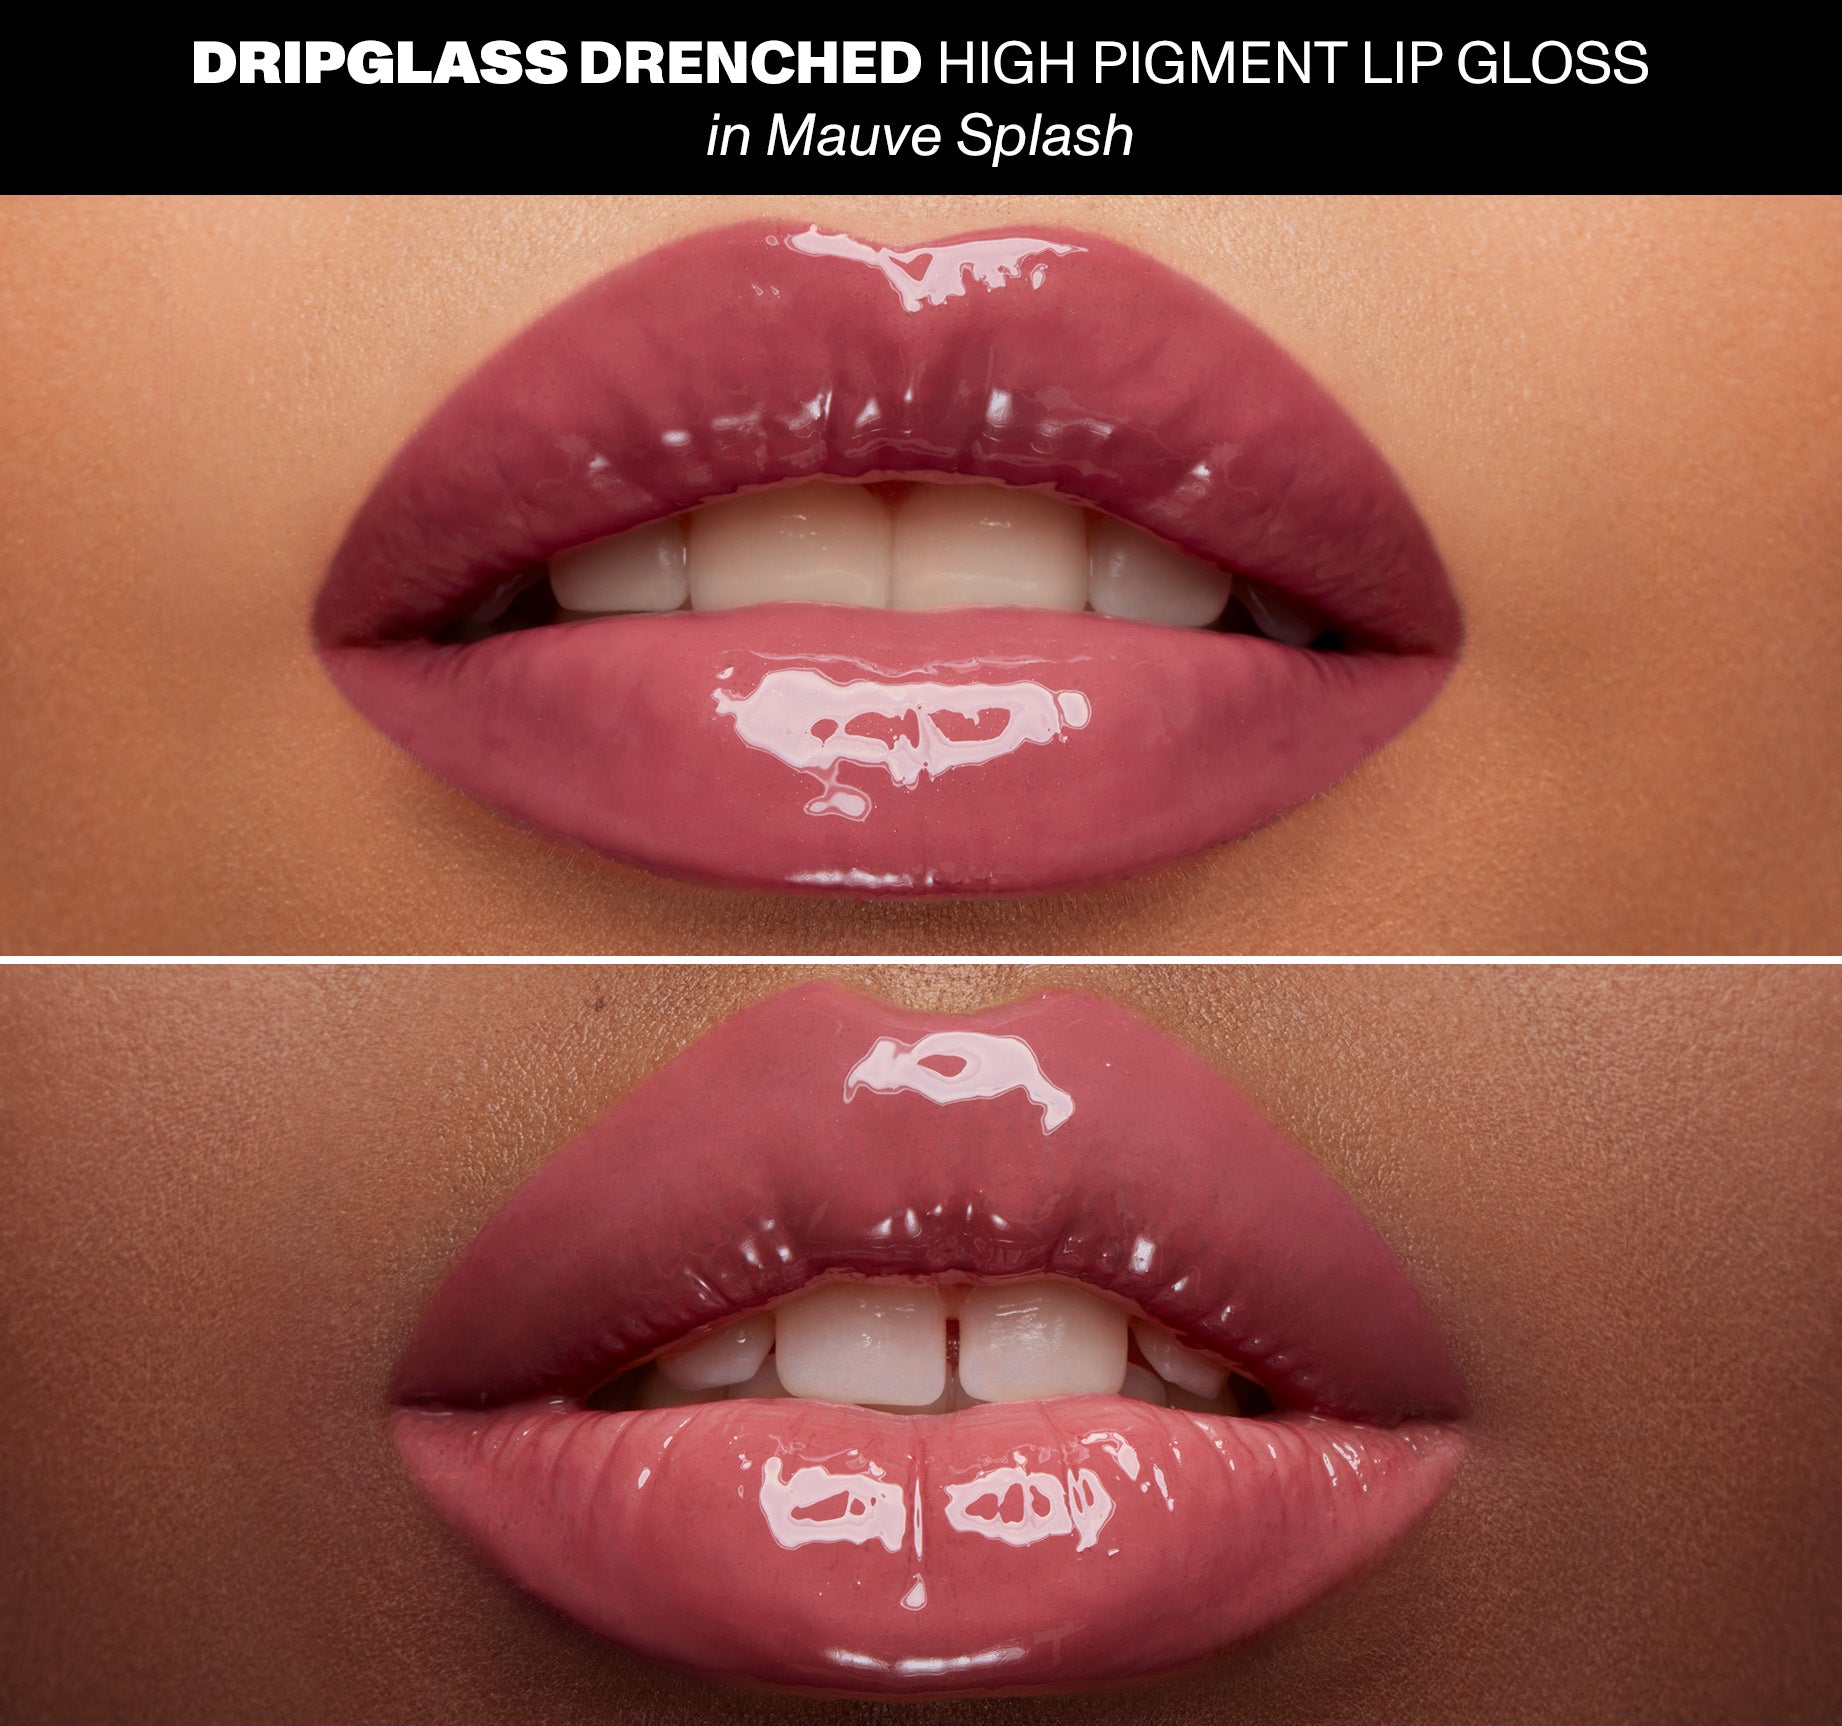 Dripglass Drenched High Pigment Lip Gloss - Mauve Splash - Image 3